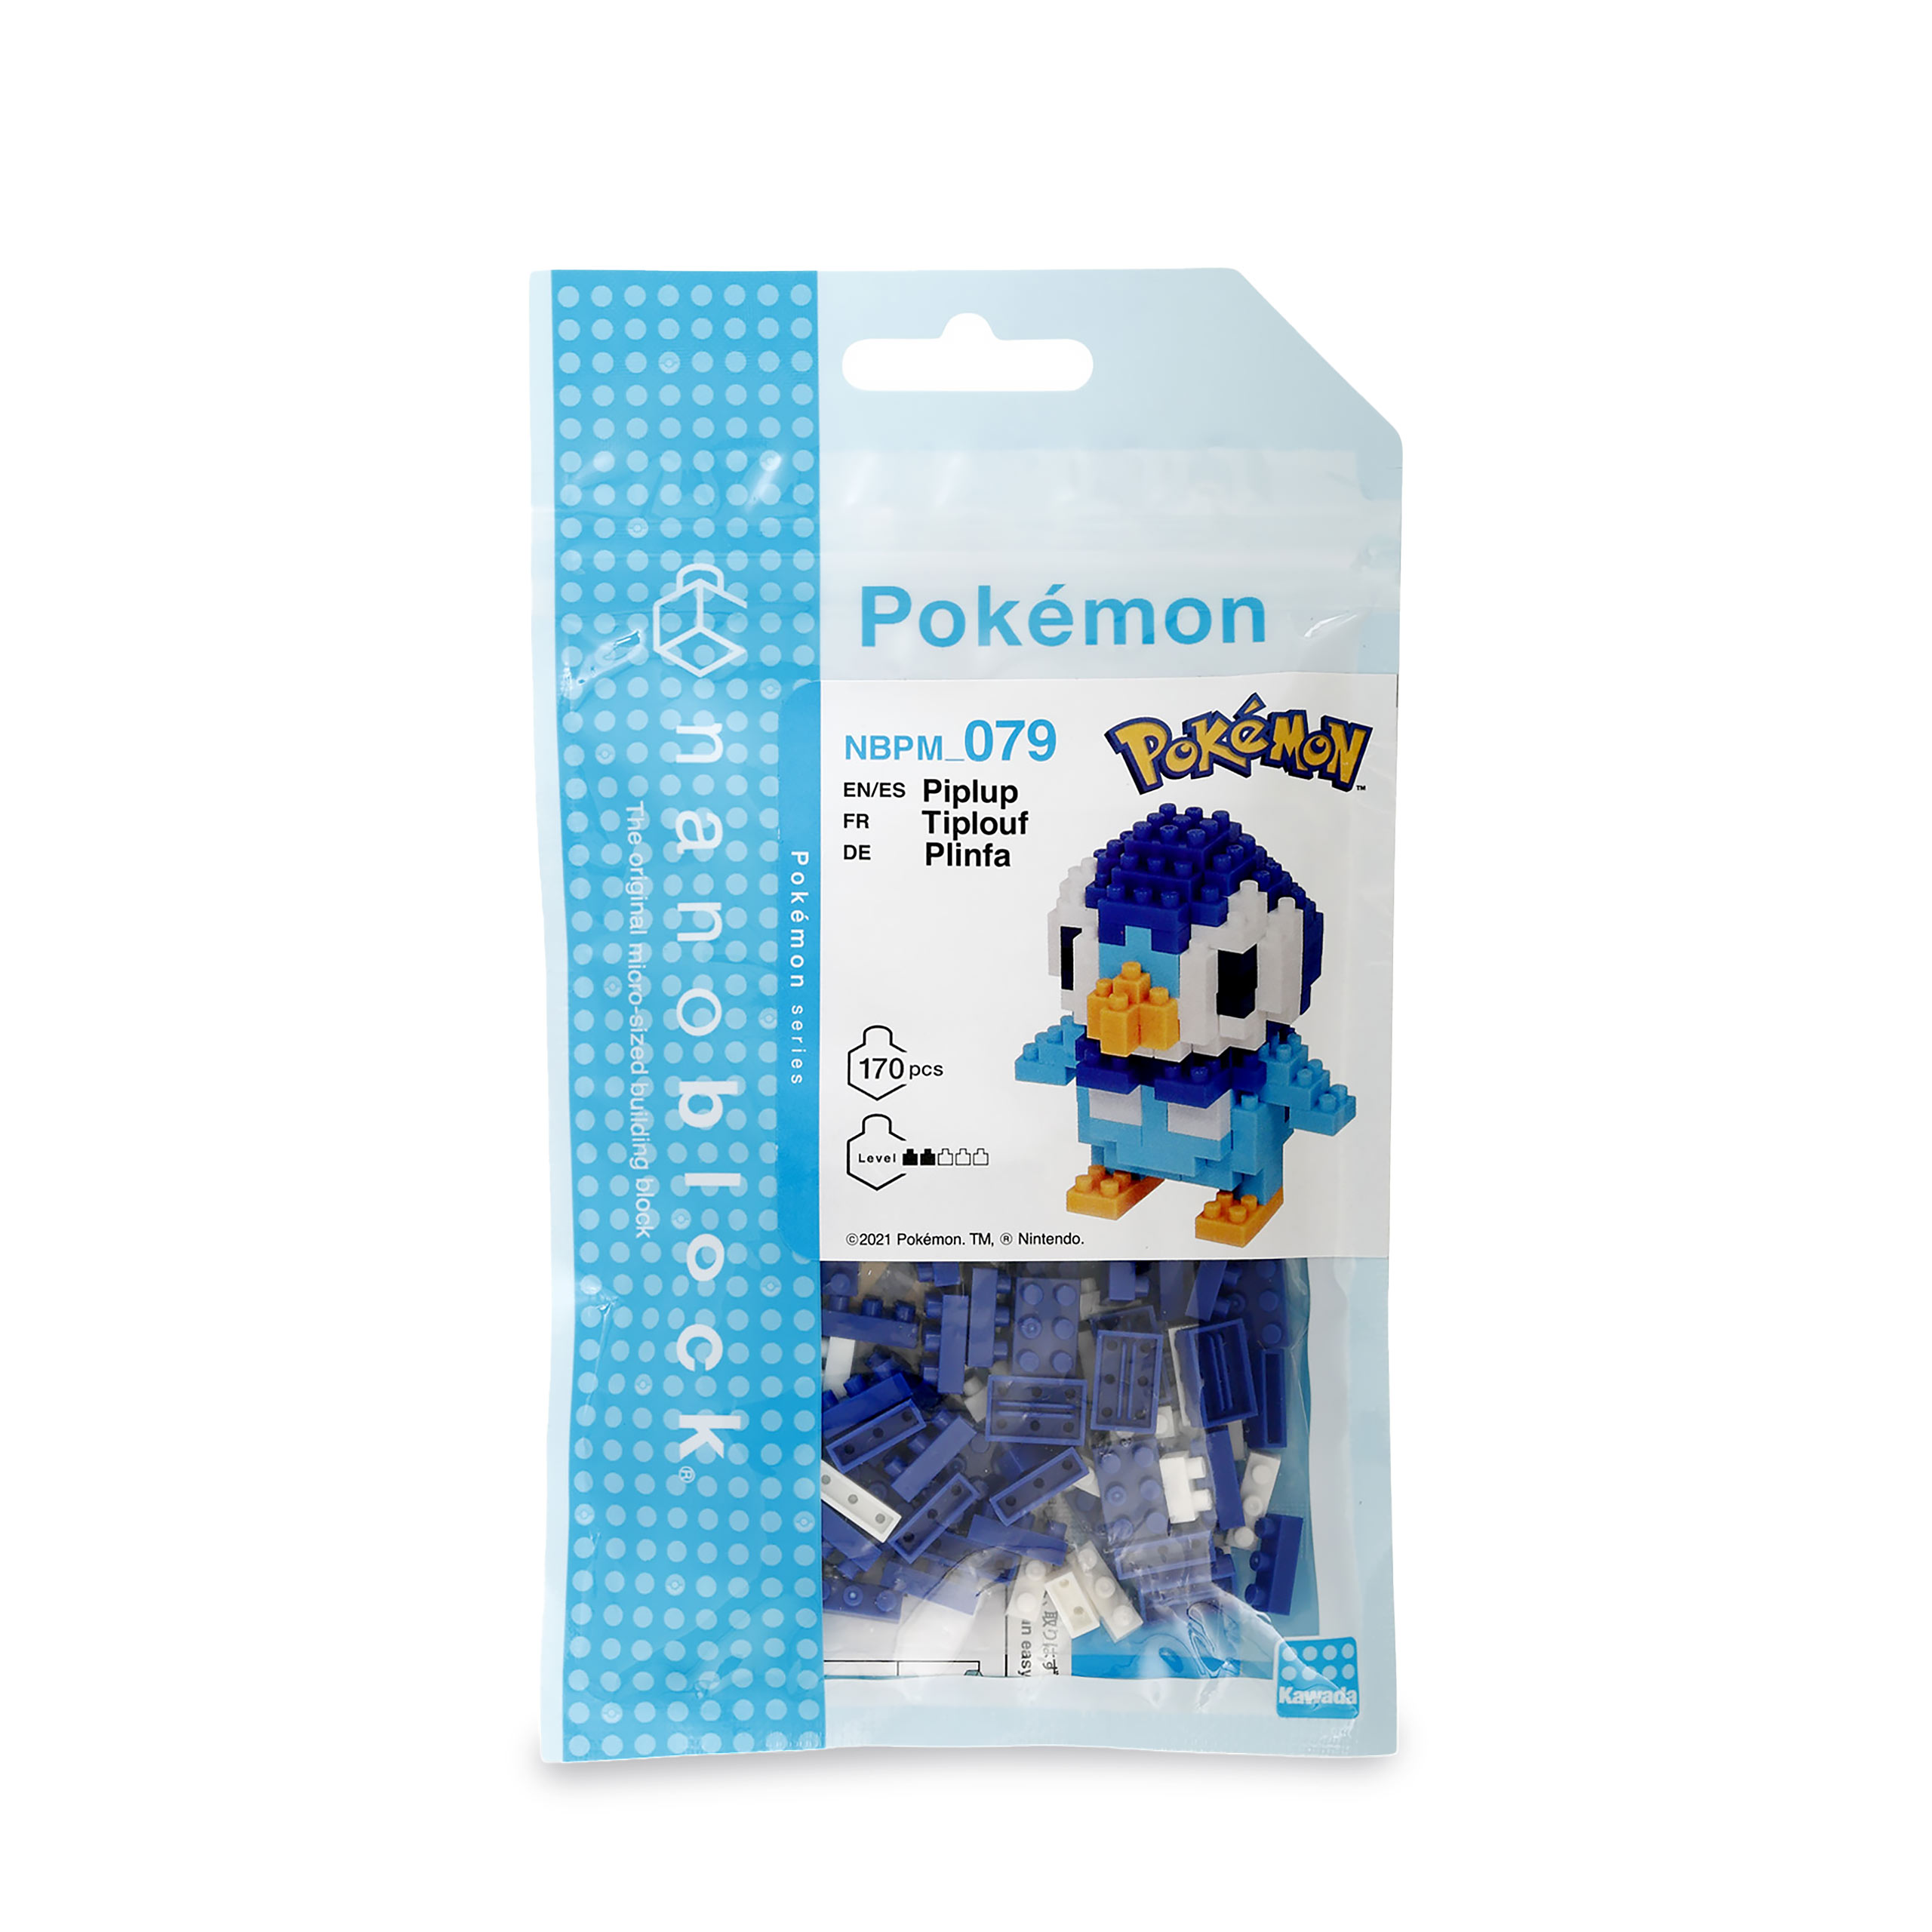 Pokemon - Piplup nanoblock Mini Building Block Figure